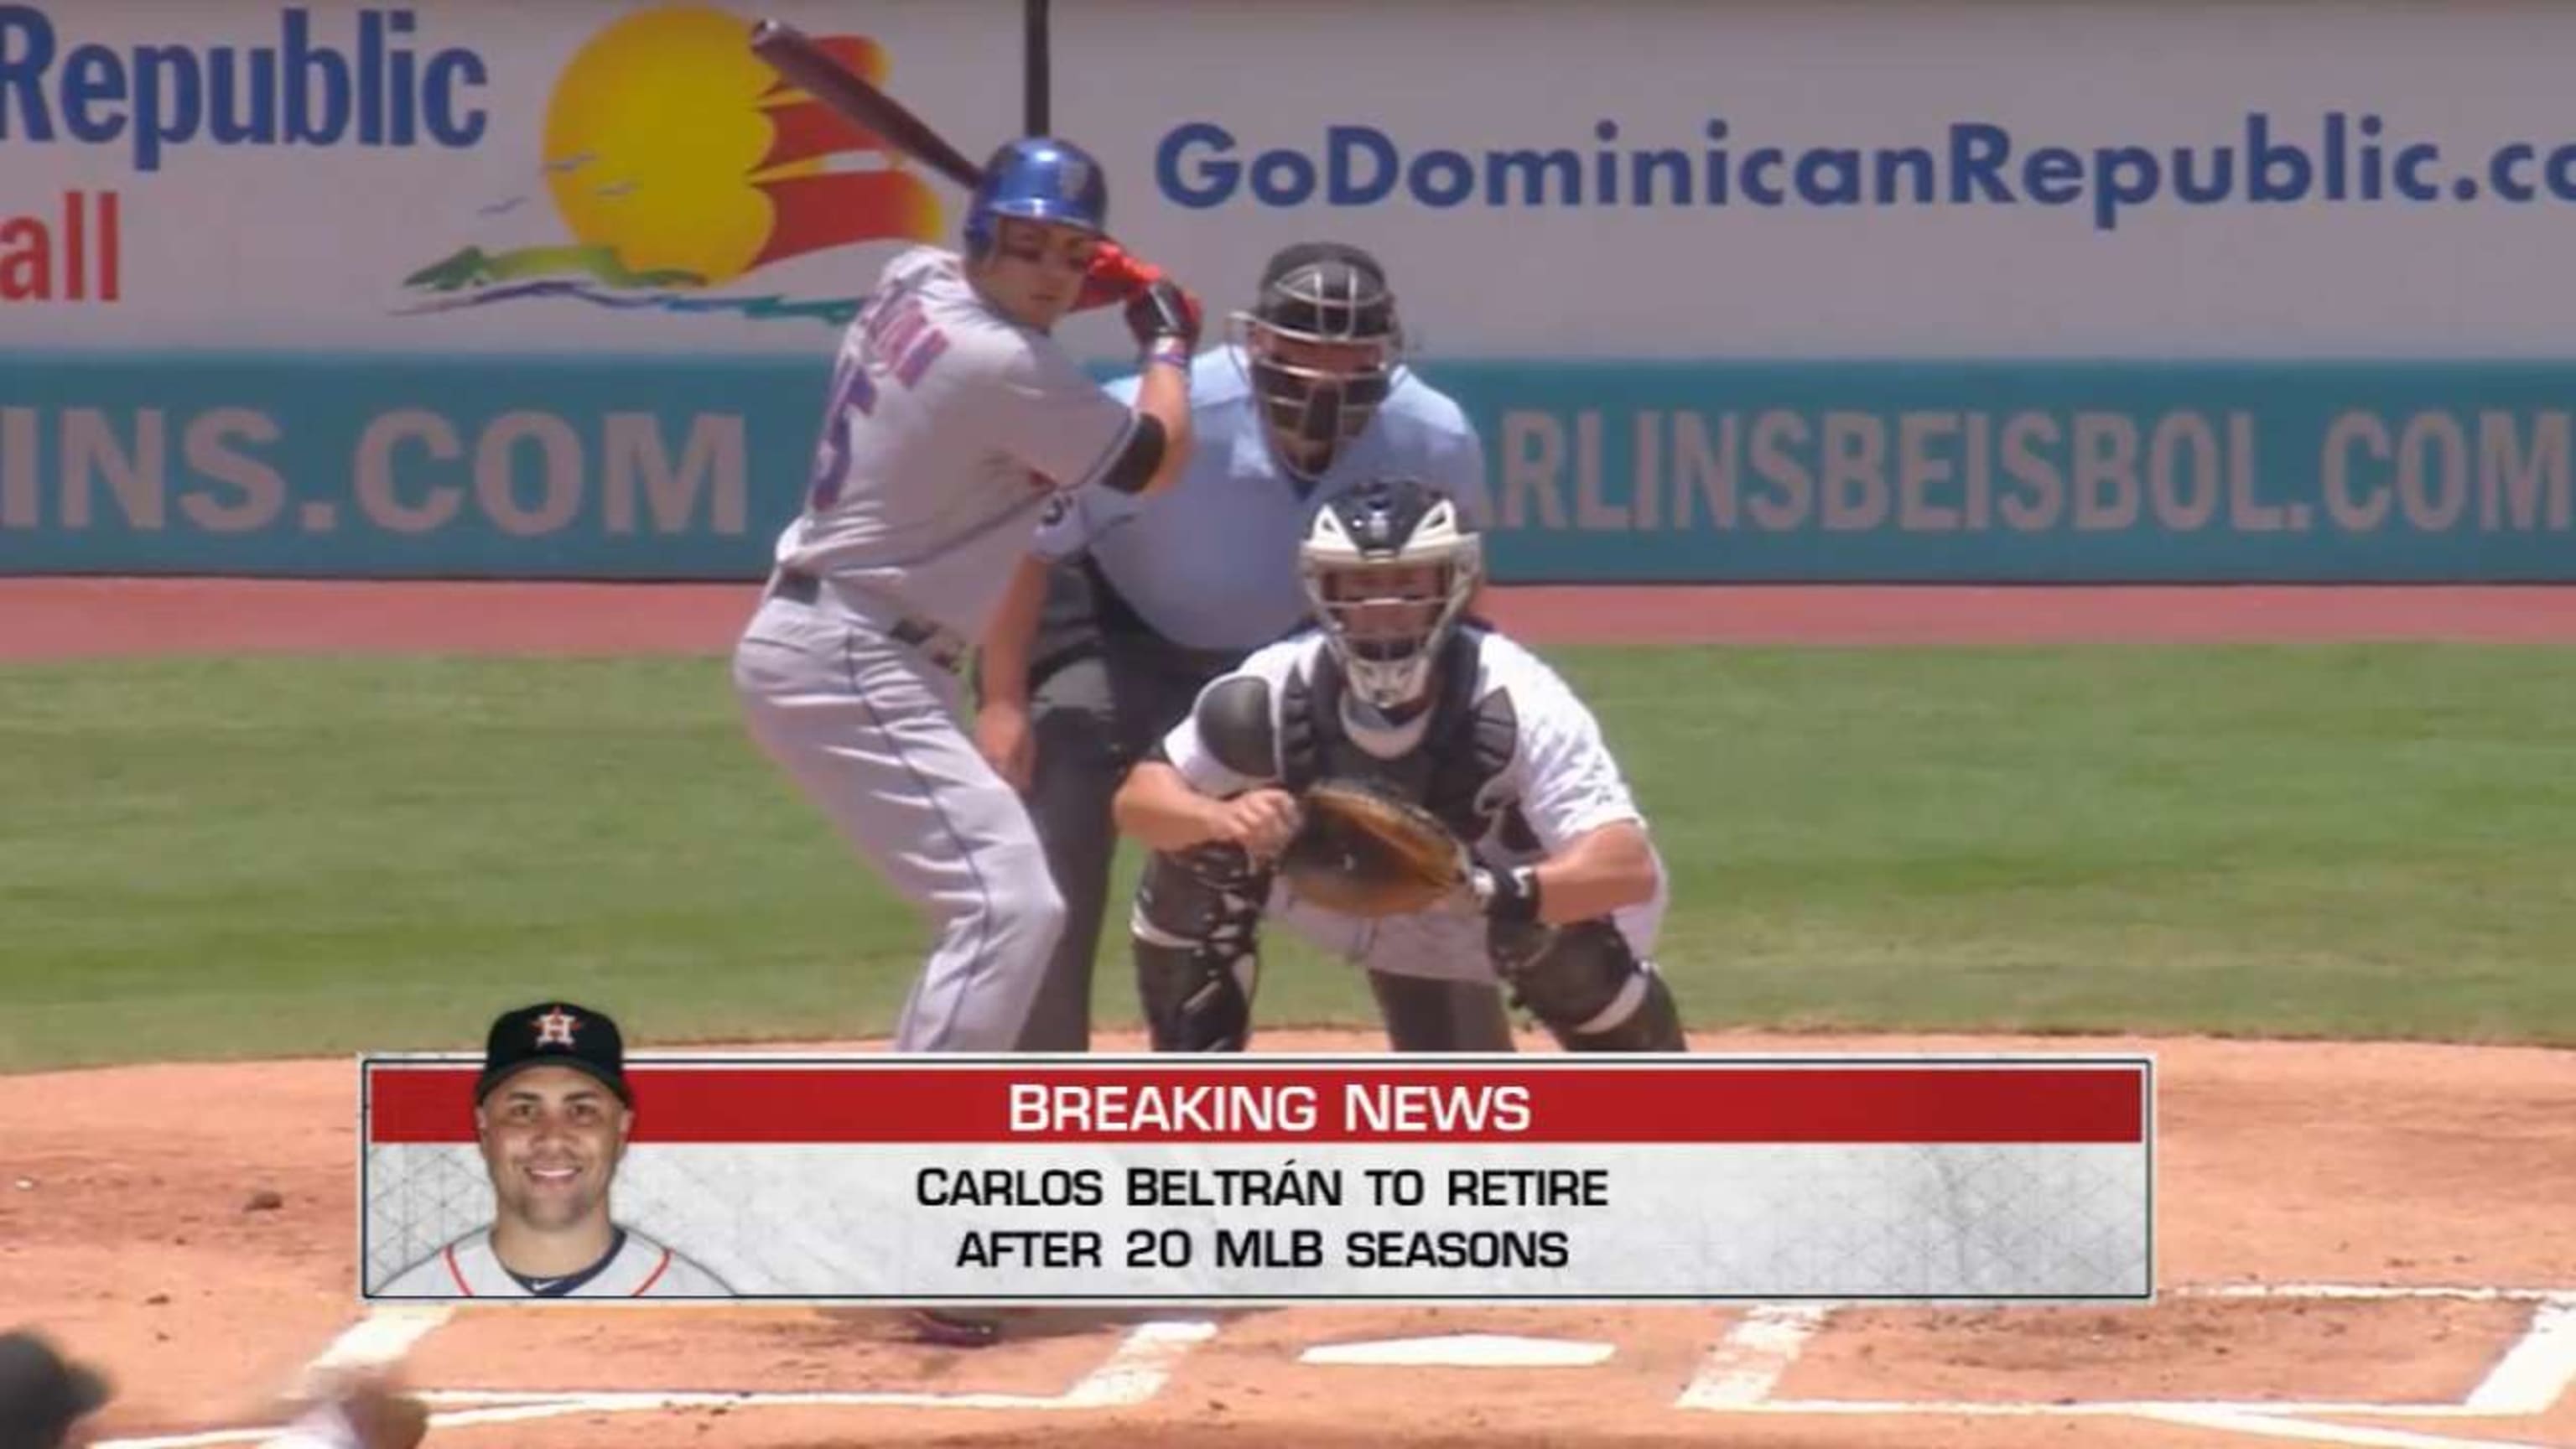 Carlos Beltran Quote: “Major League Baseball should retire Roberto